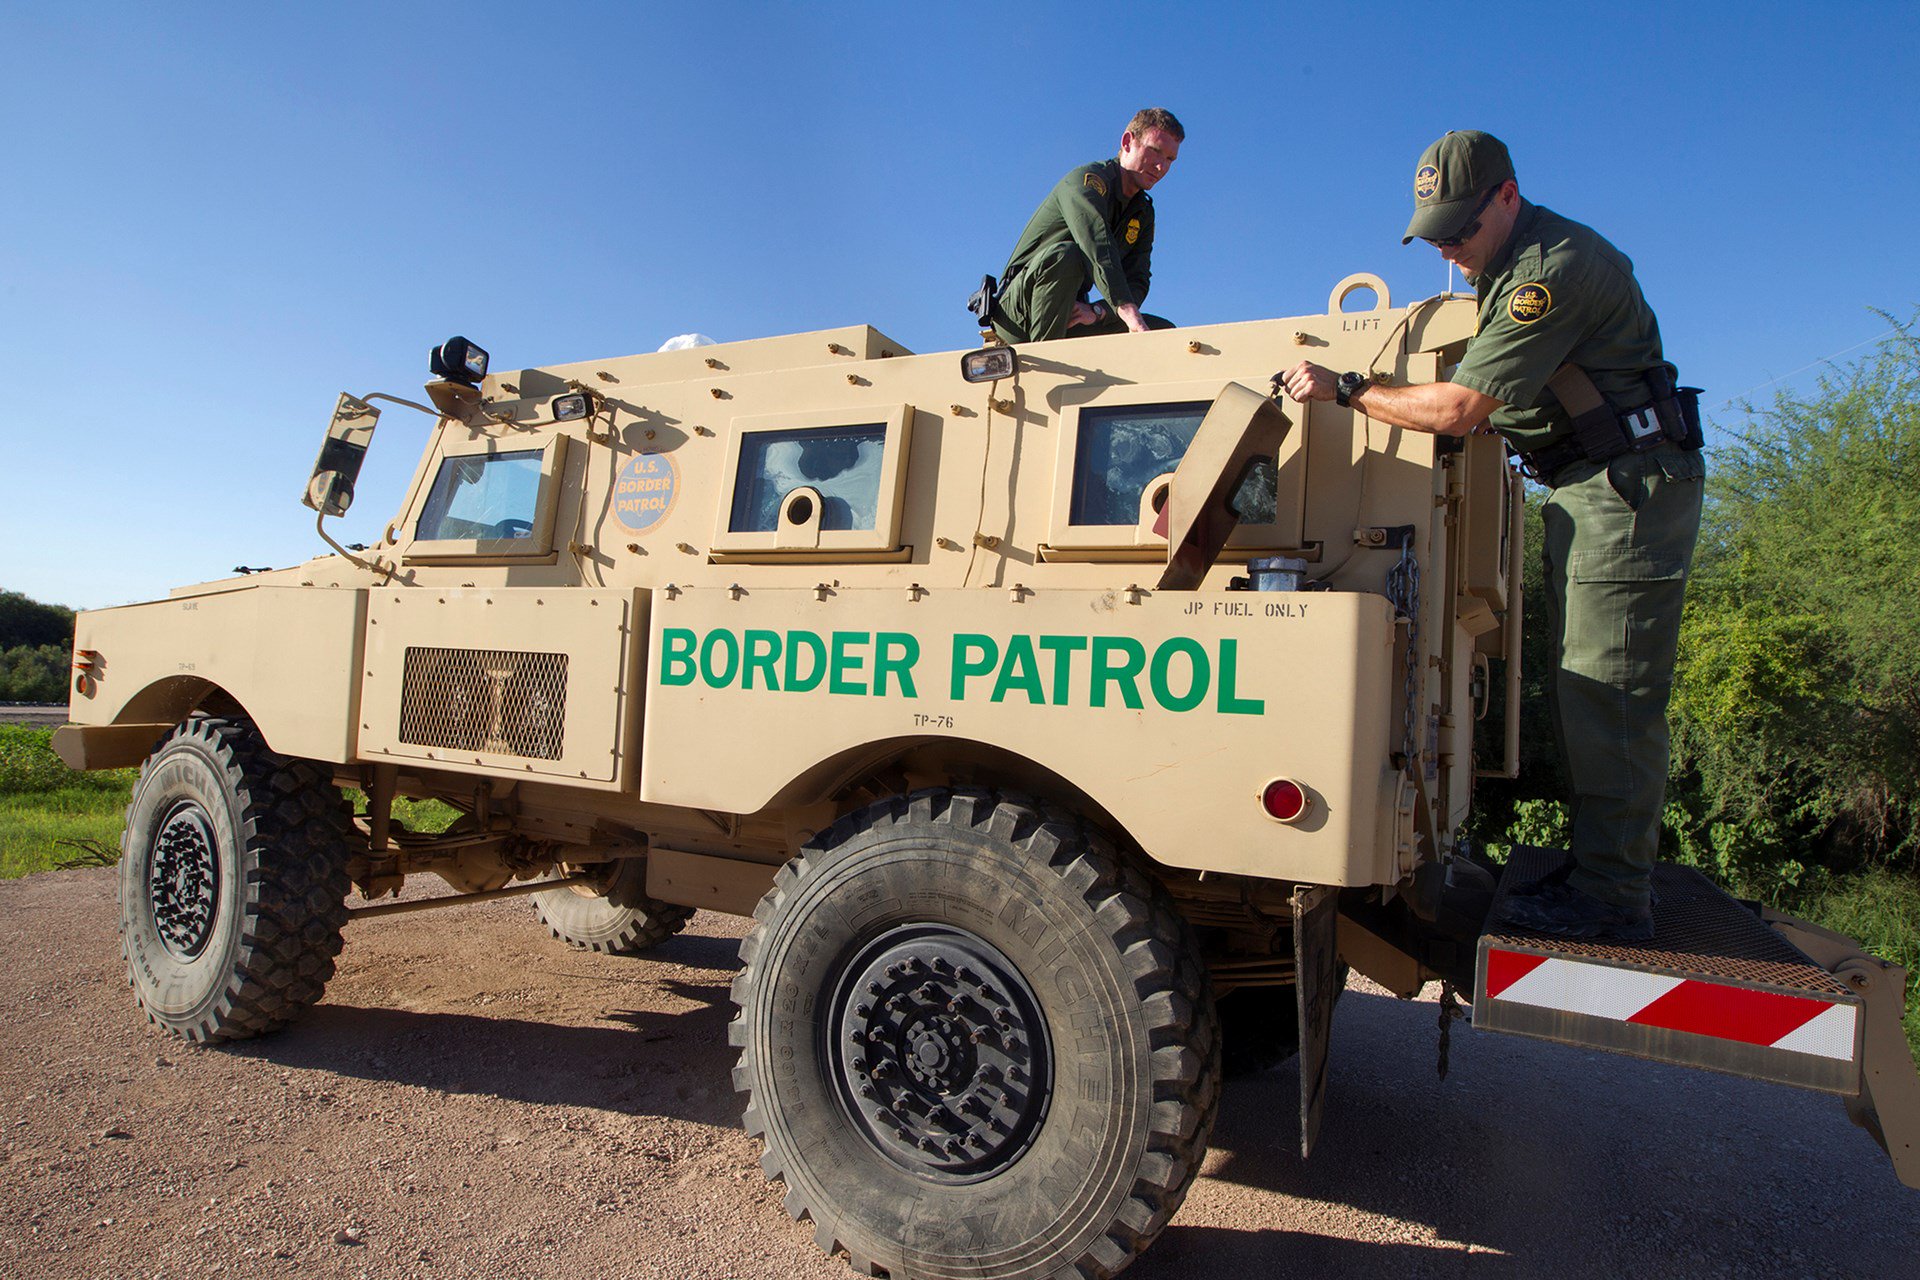 Border patrol compilation pic